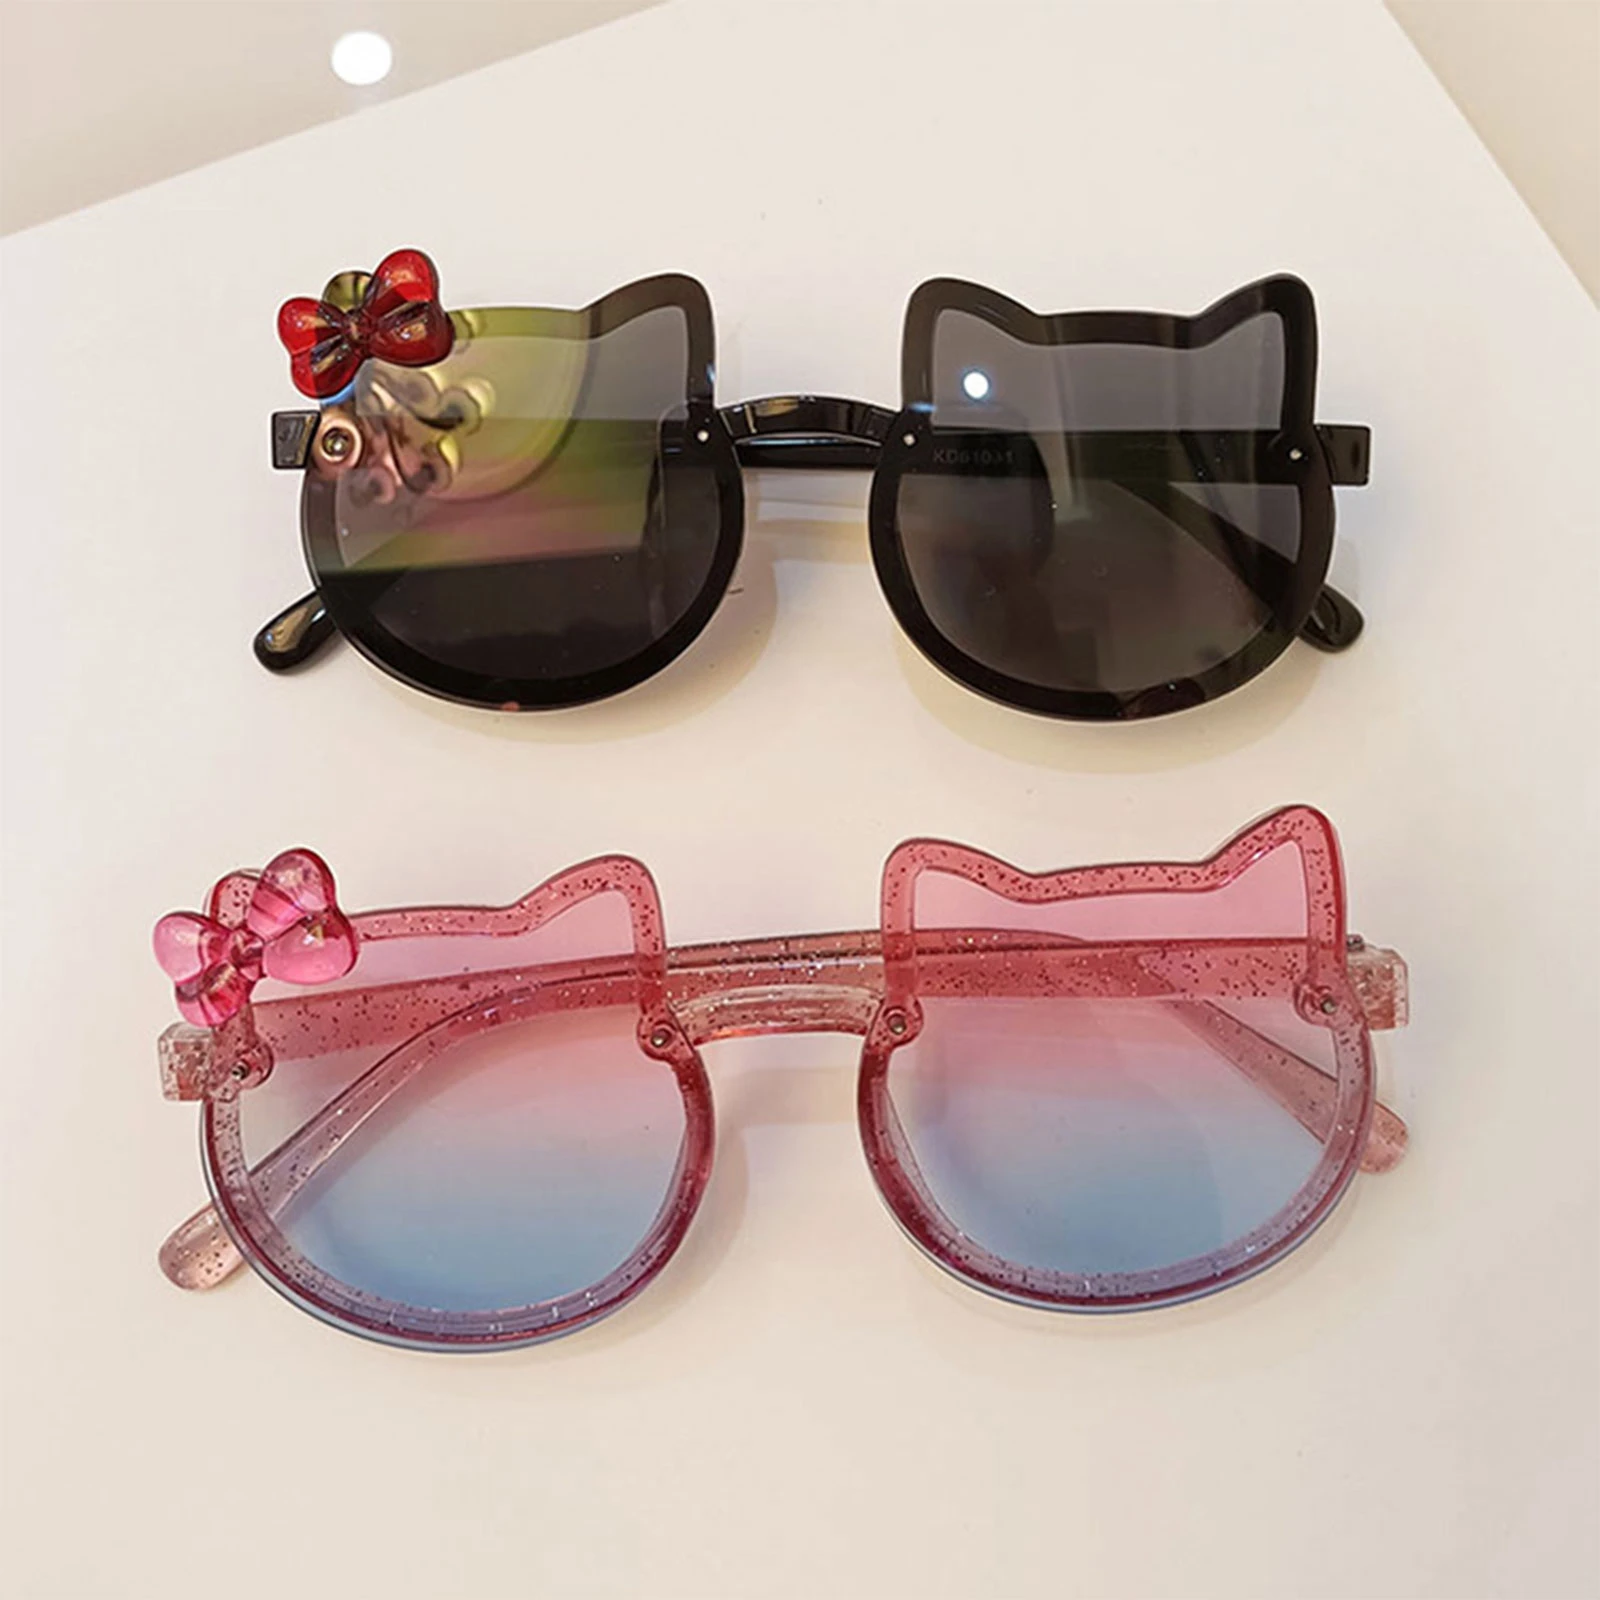 Vintage Kids Sunglasses Boys Girls Fashion Cute Cat Frame Eyewear Beach Outdoors Children Travel UV400 Protection Sunglasses